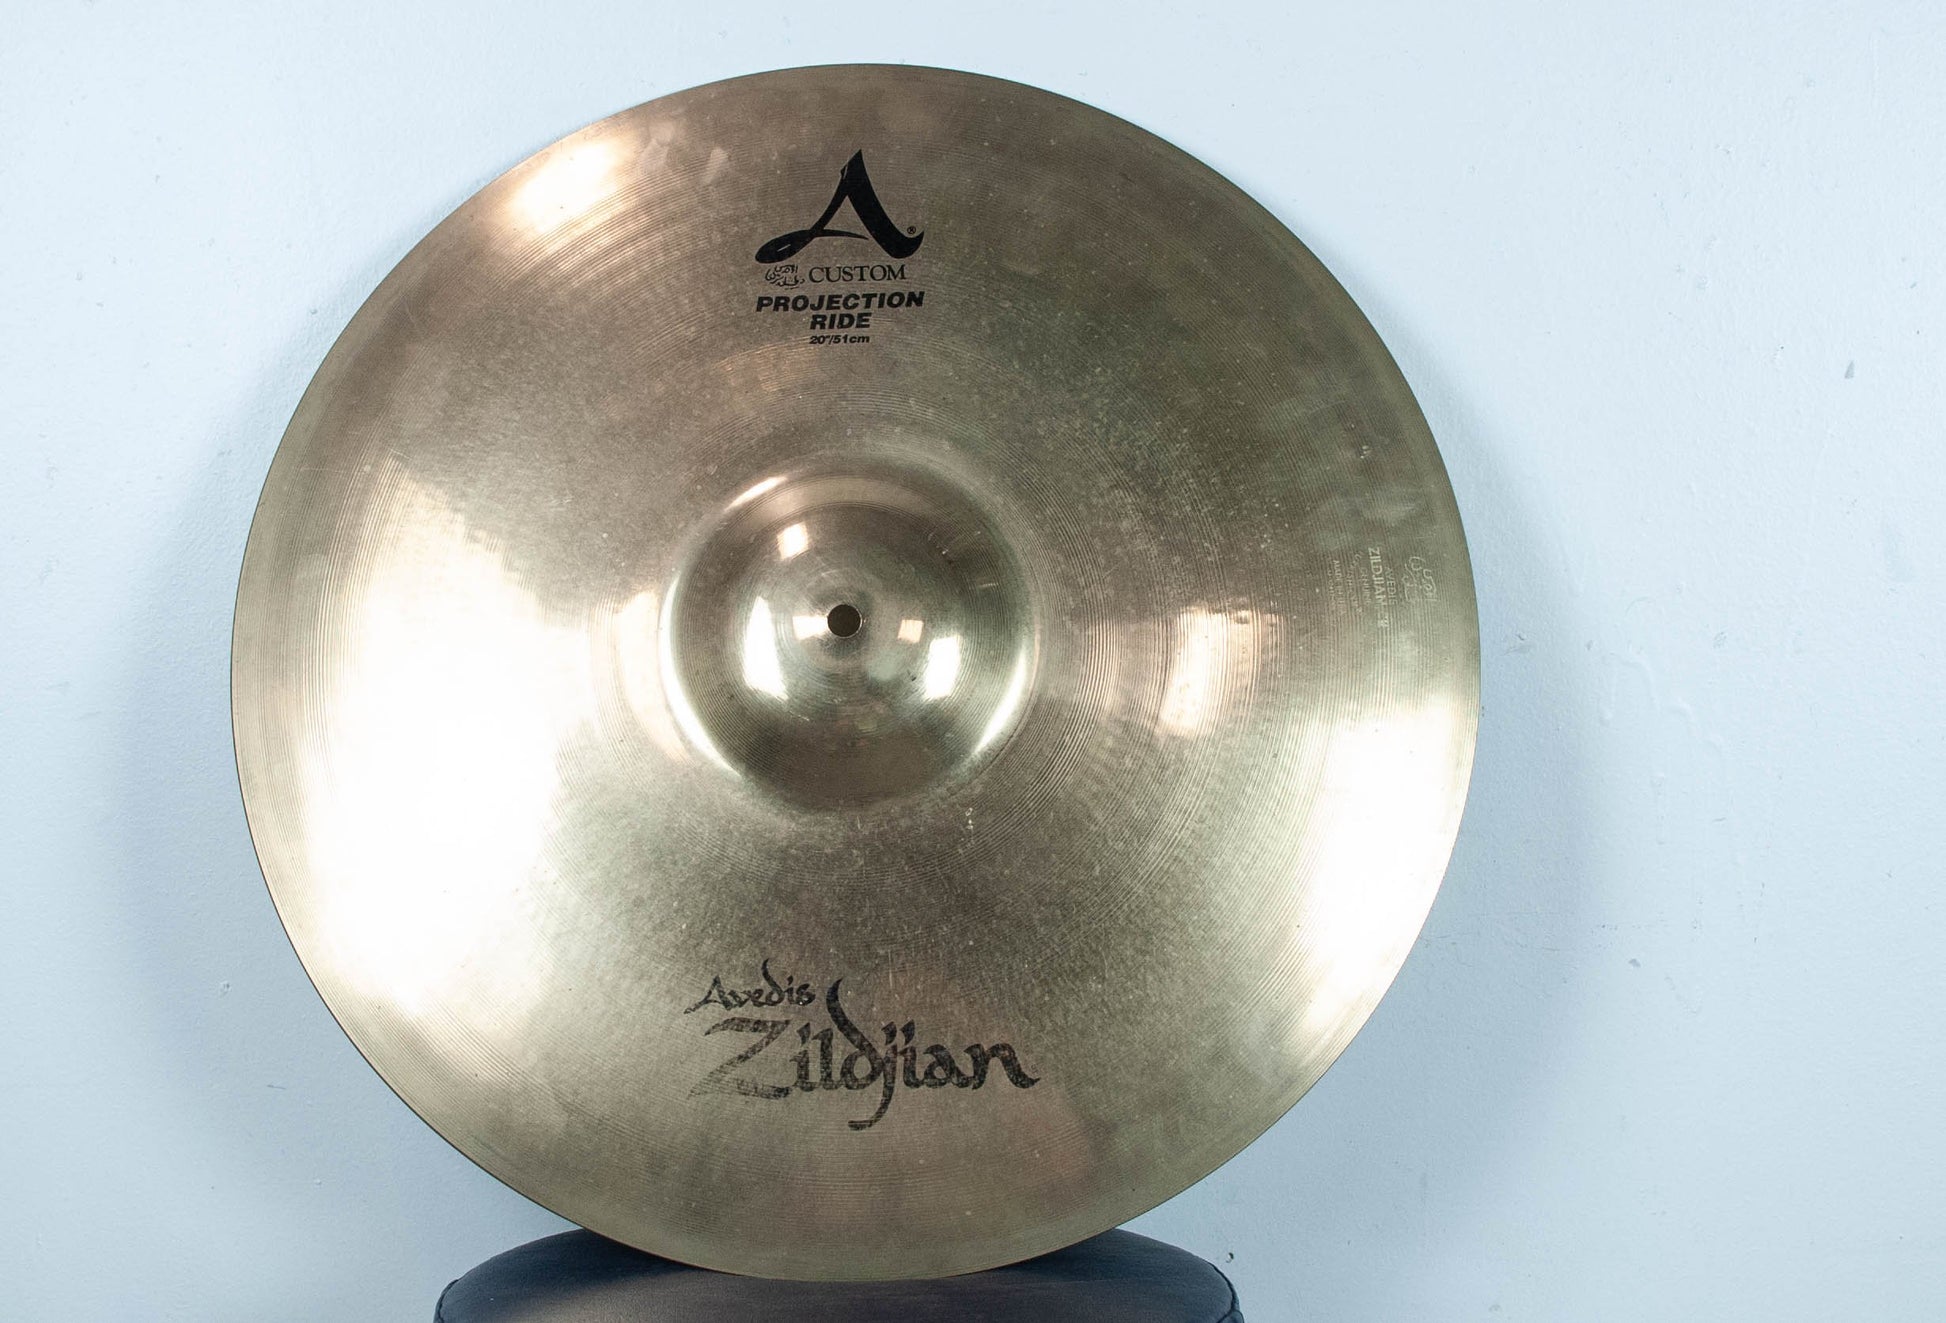 Zildjian A Custom 20" Projection Ride Cymbal 2770g